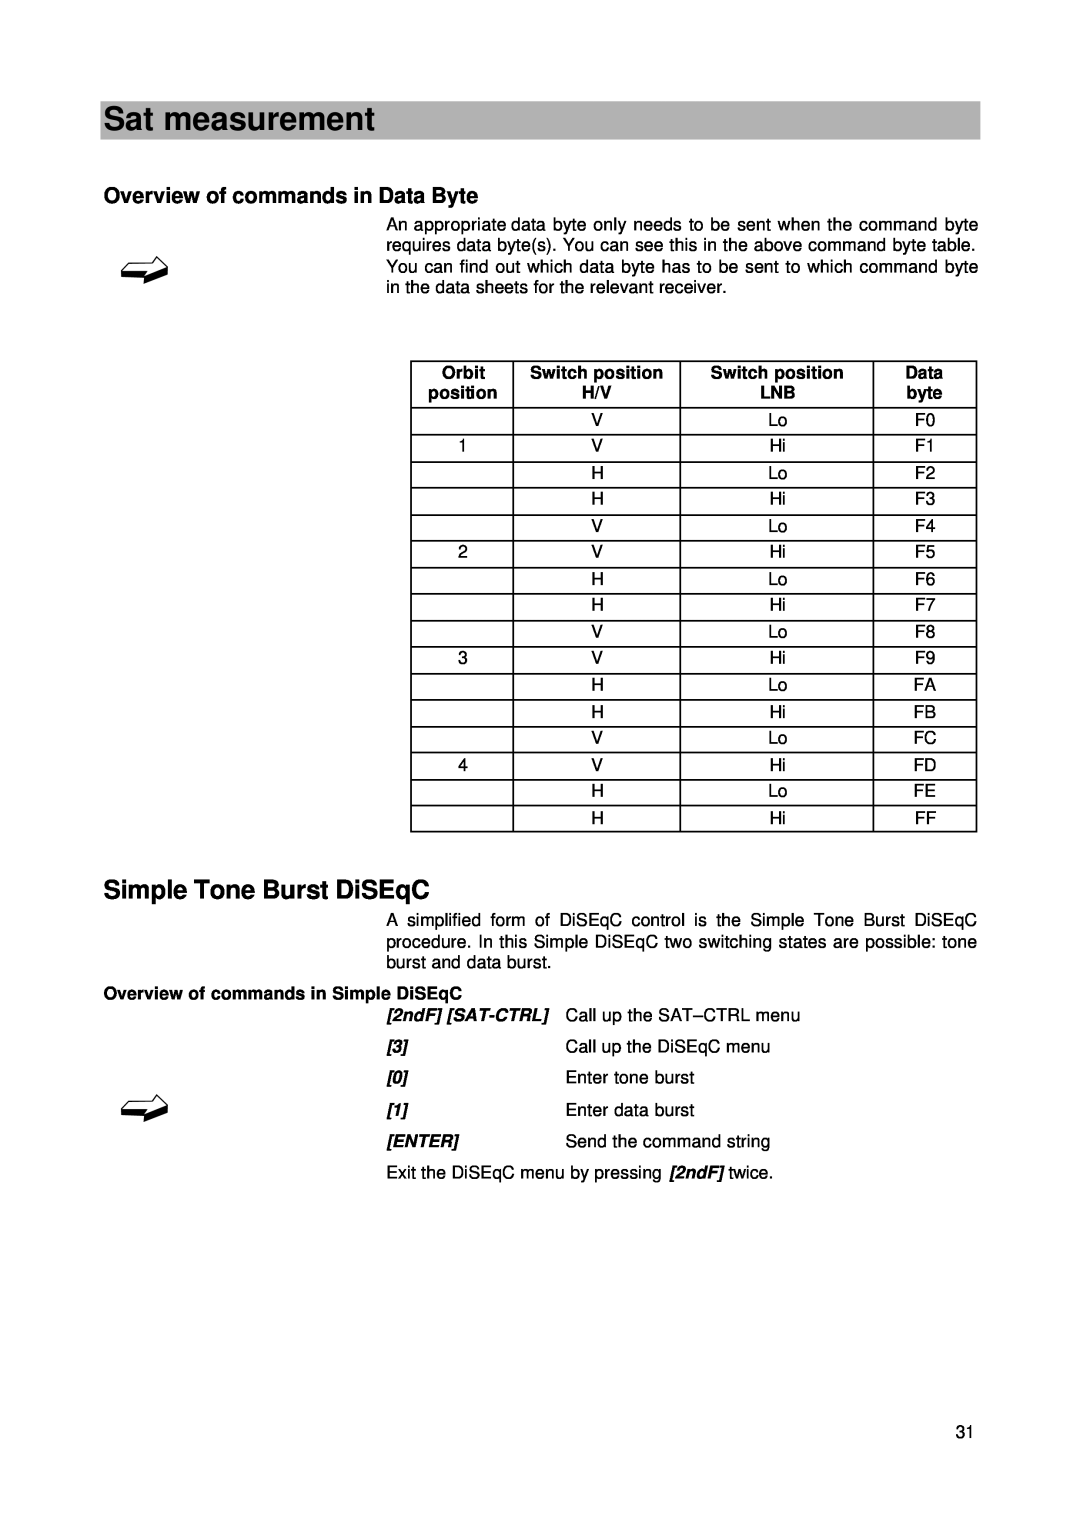 Kathrein MSK 24 manual Simple Tone Burst DiSEqC, Overview of commands in Data Byte, Sat measurement, Enter 